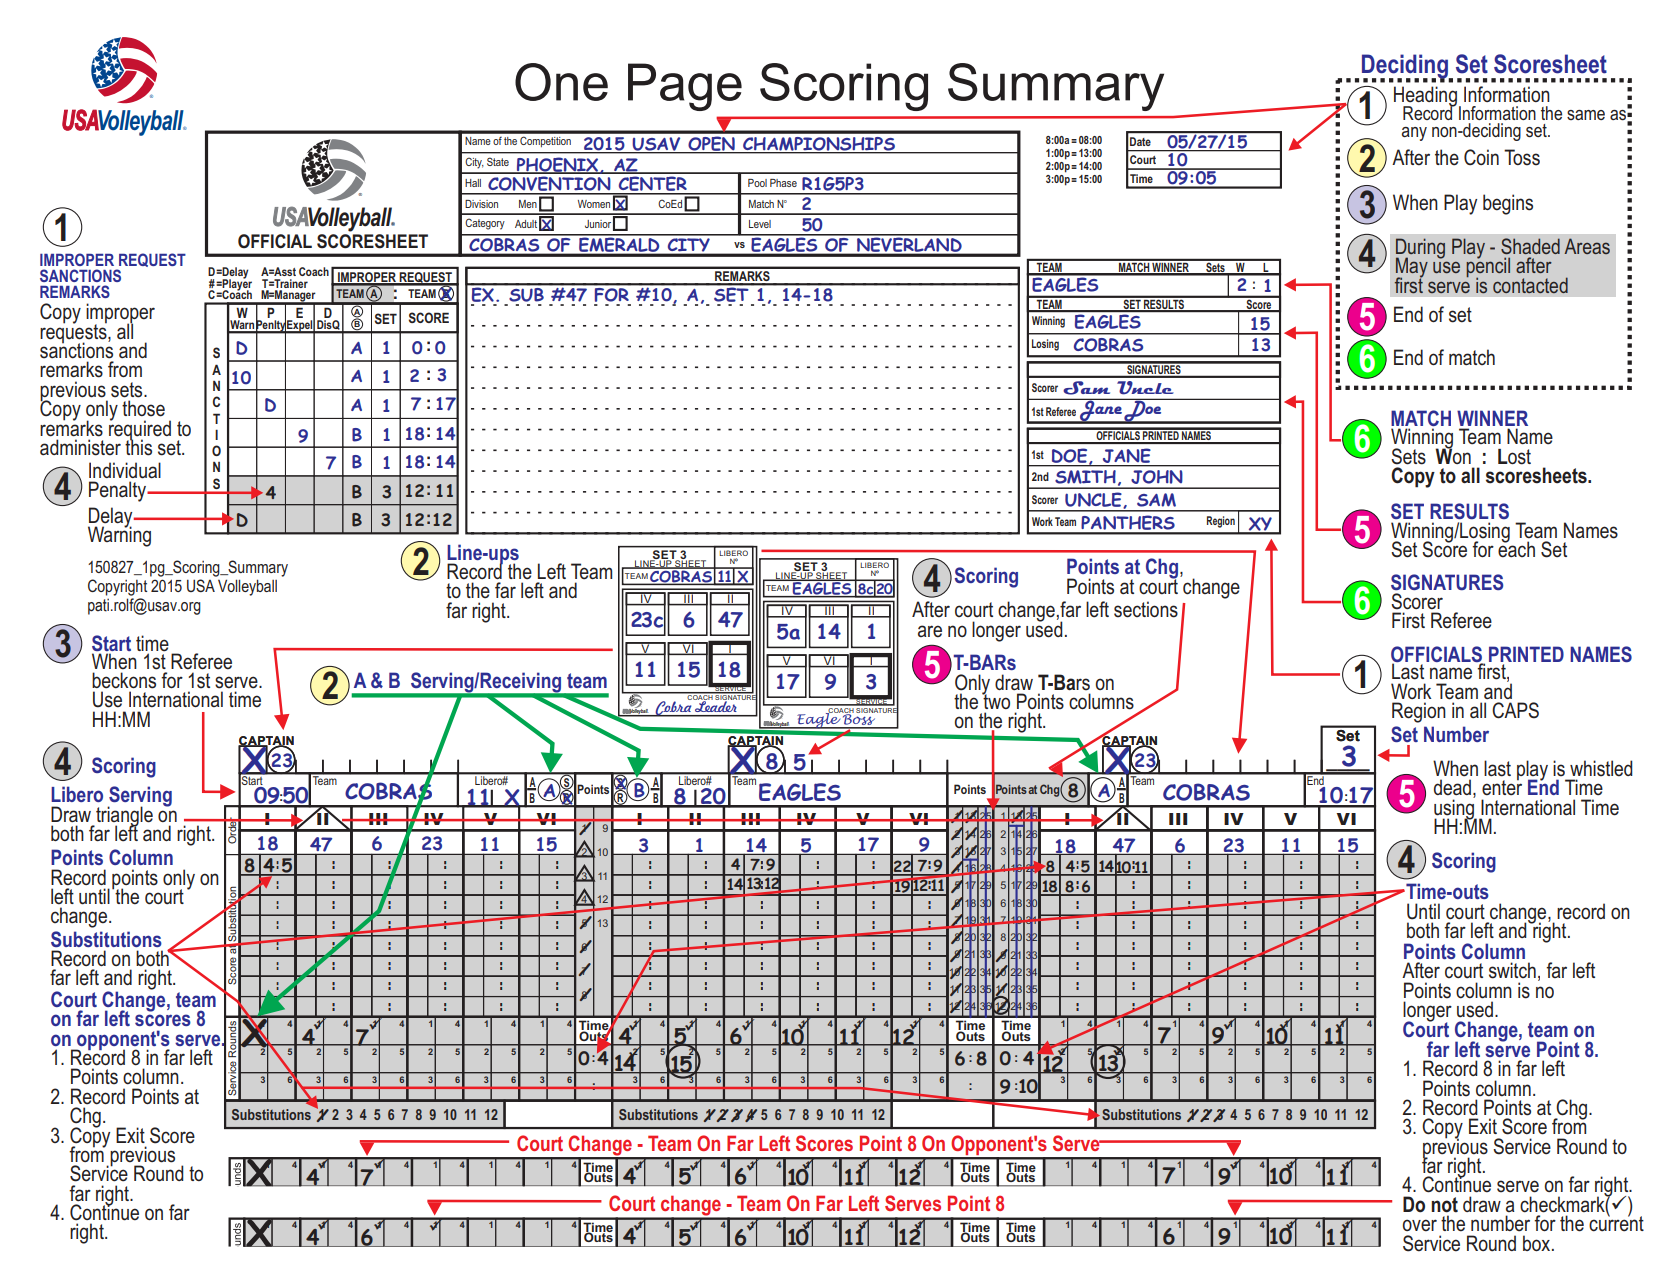 Example Scoresheet for Deciding Set